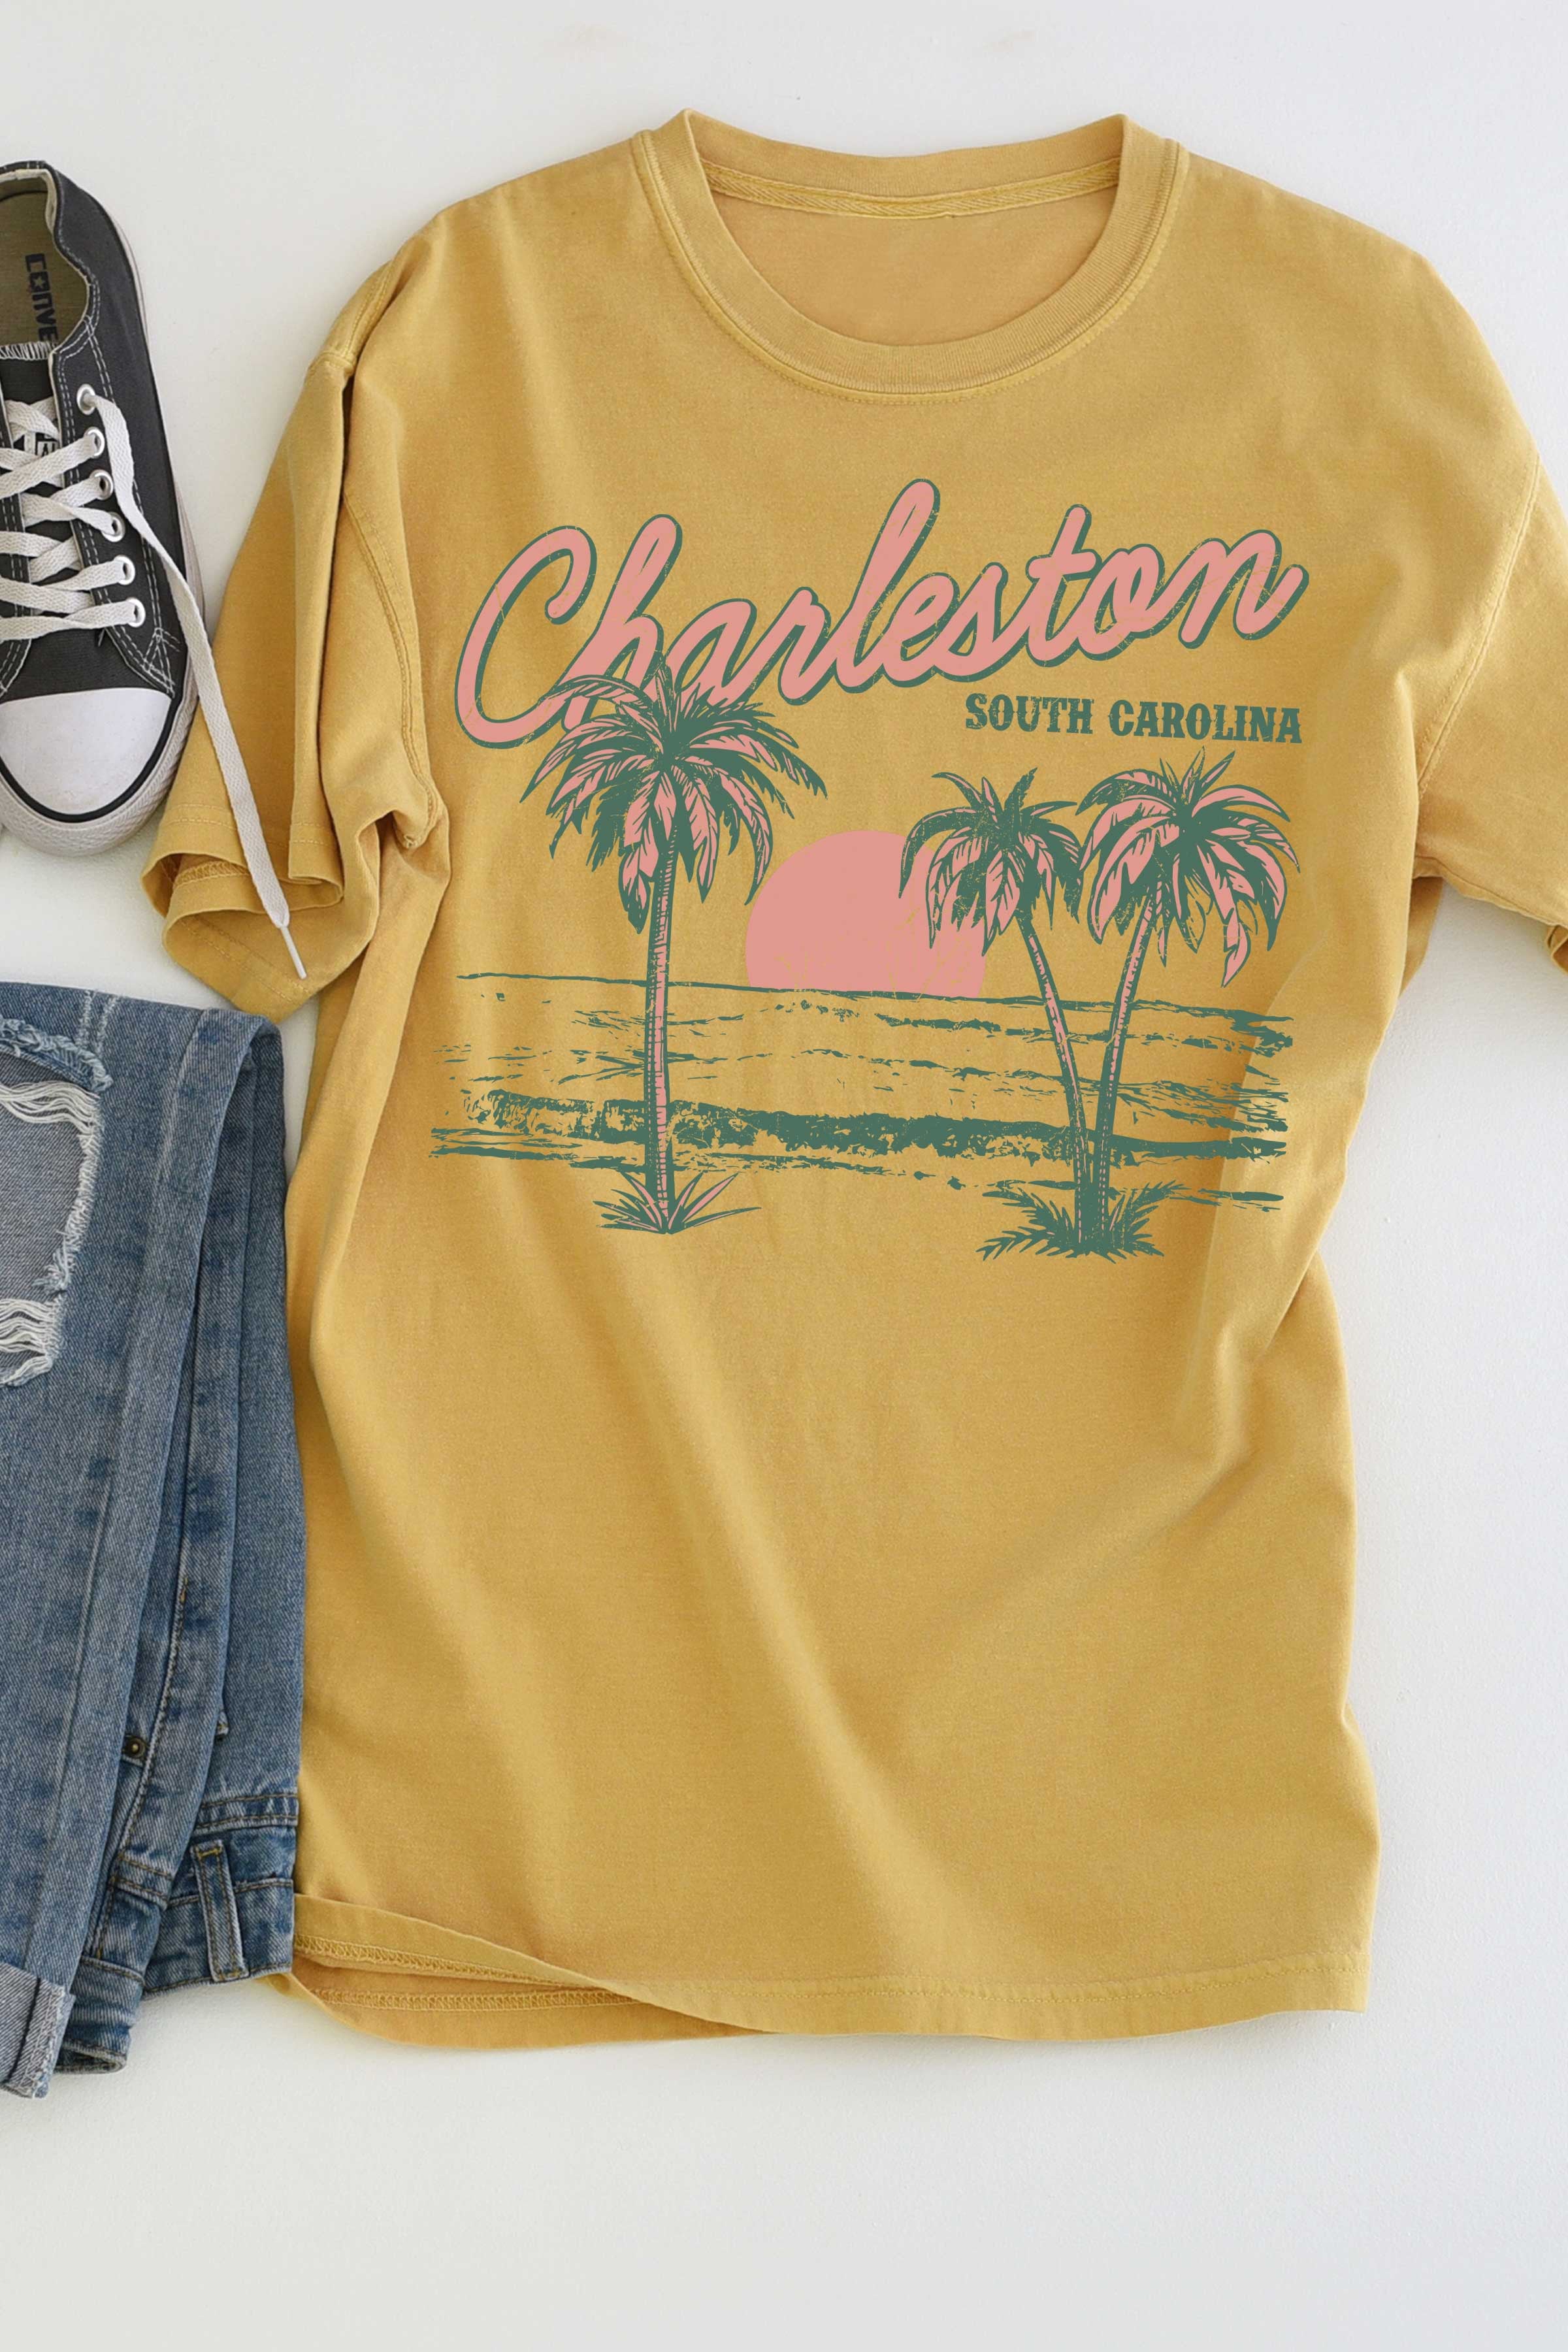 Charleston California Graphic Tee | Graphic Tees – Autumn Grove Clothing